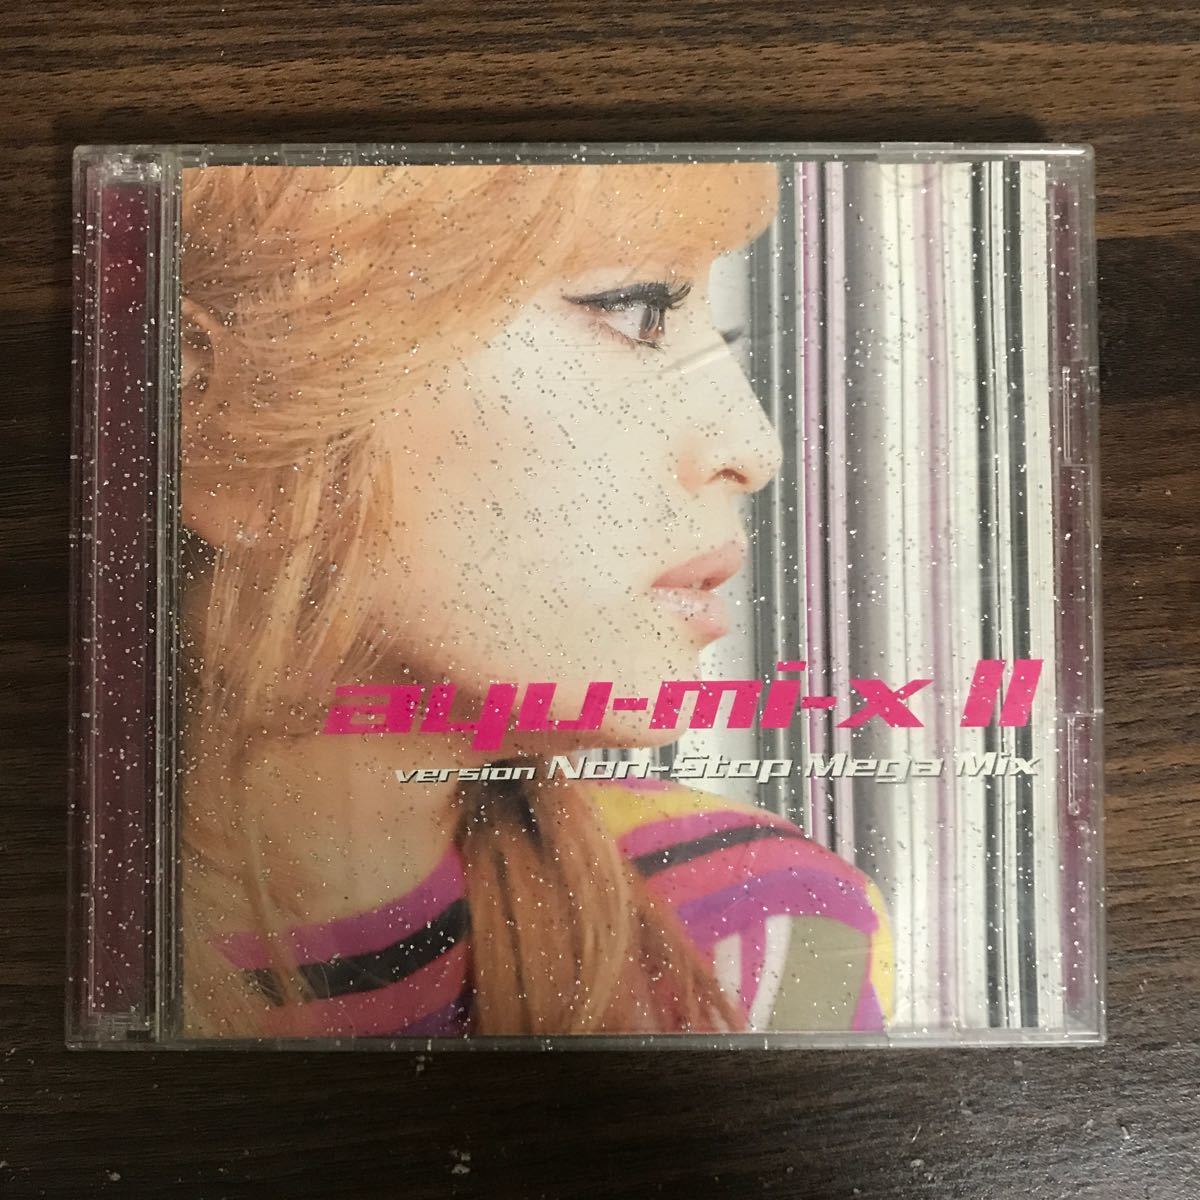 E449 中古CD100円 浜崎あゆみ ayu-mix II version Non-Stop Mega Mix_画像1